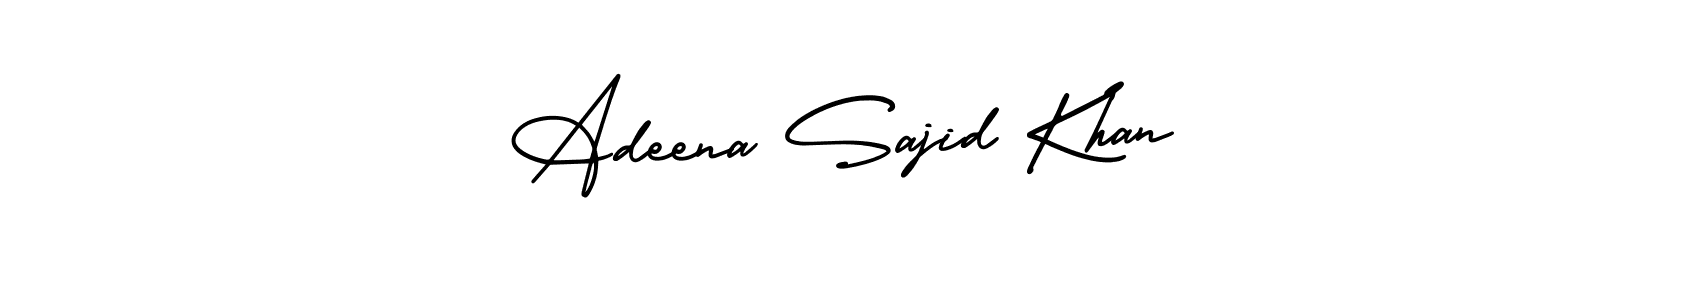 Make a beautiful signature design for name Adeena Sajid Khan. Use this online signature maker to create a handwritten signature for free. Adeena Sajid Khan signature style 3 images and pictures png